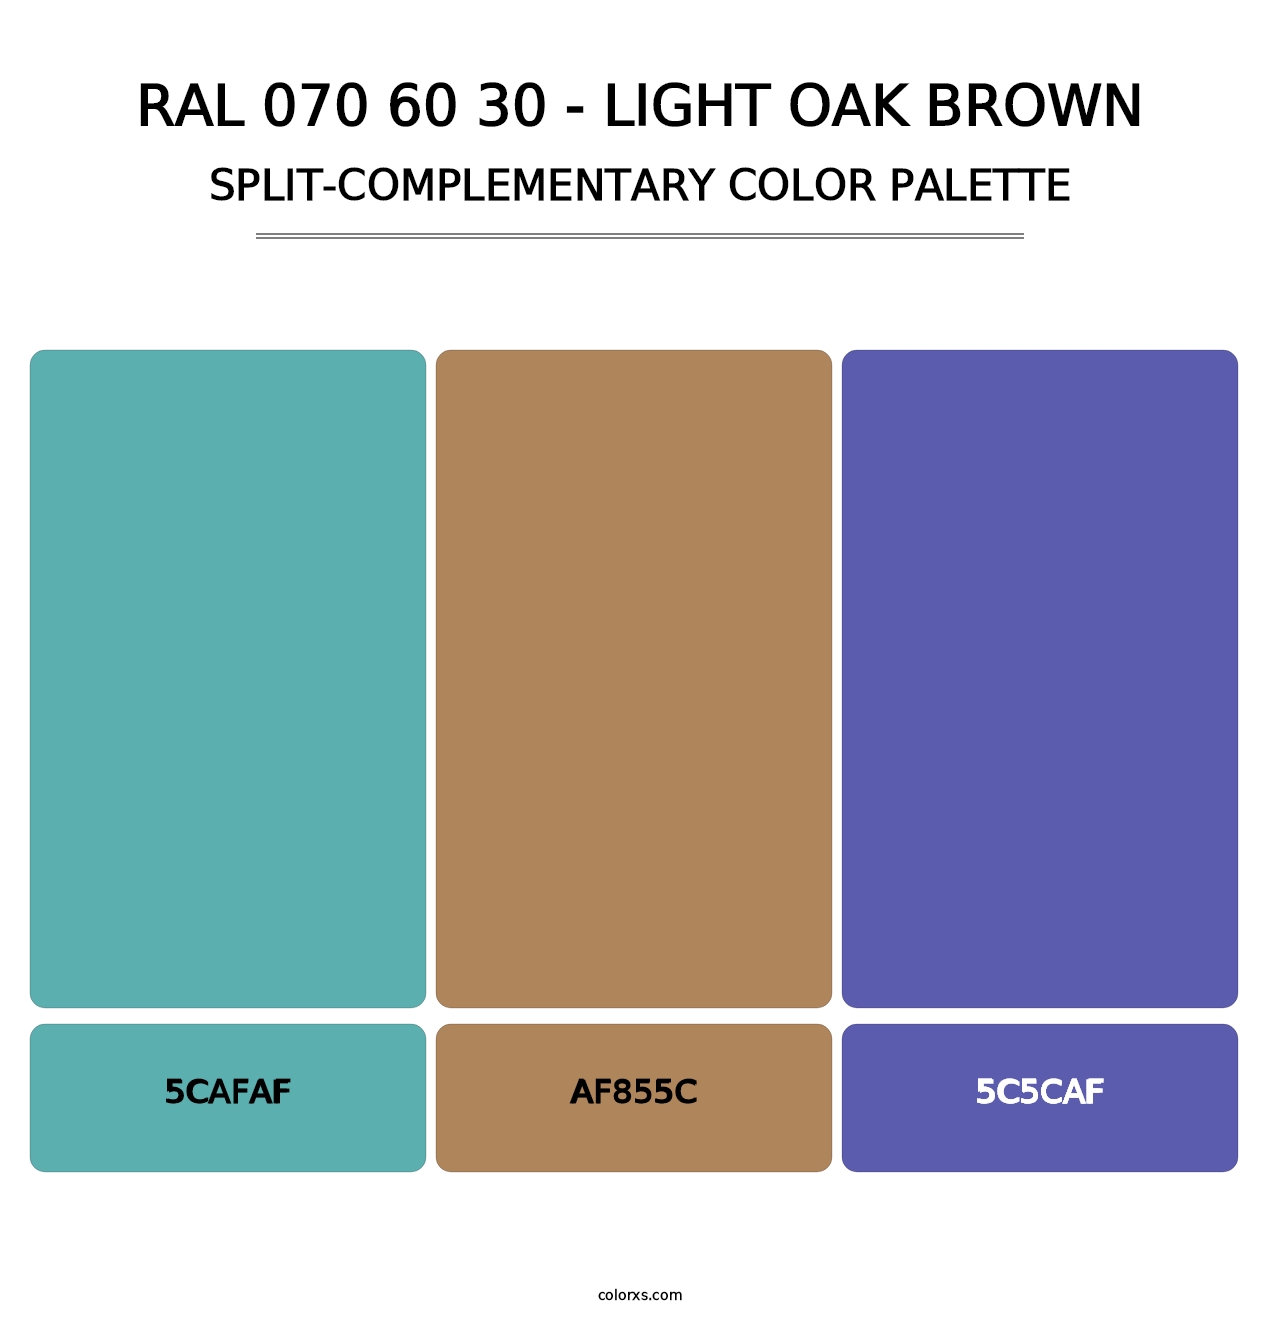 RAL 070 60 30 - Light Oak Brown - Split-Complementary Color Palette